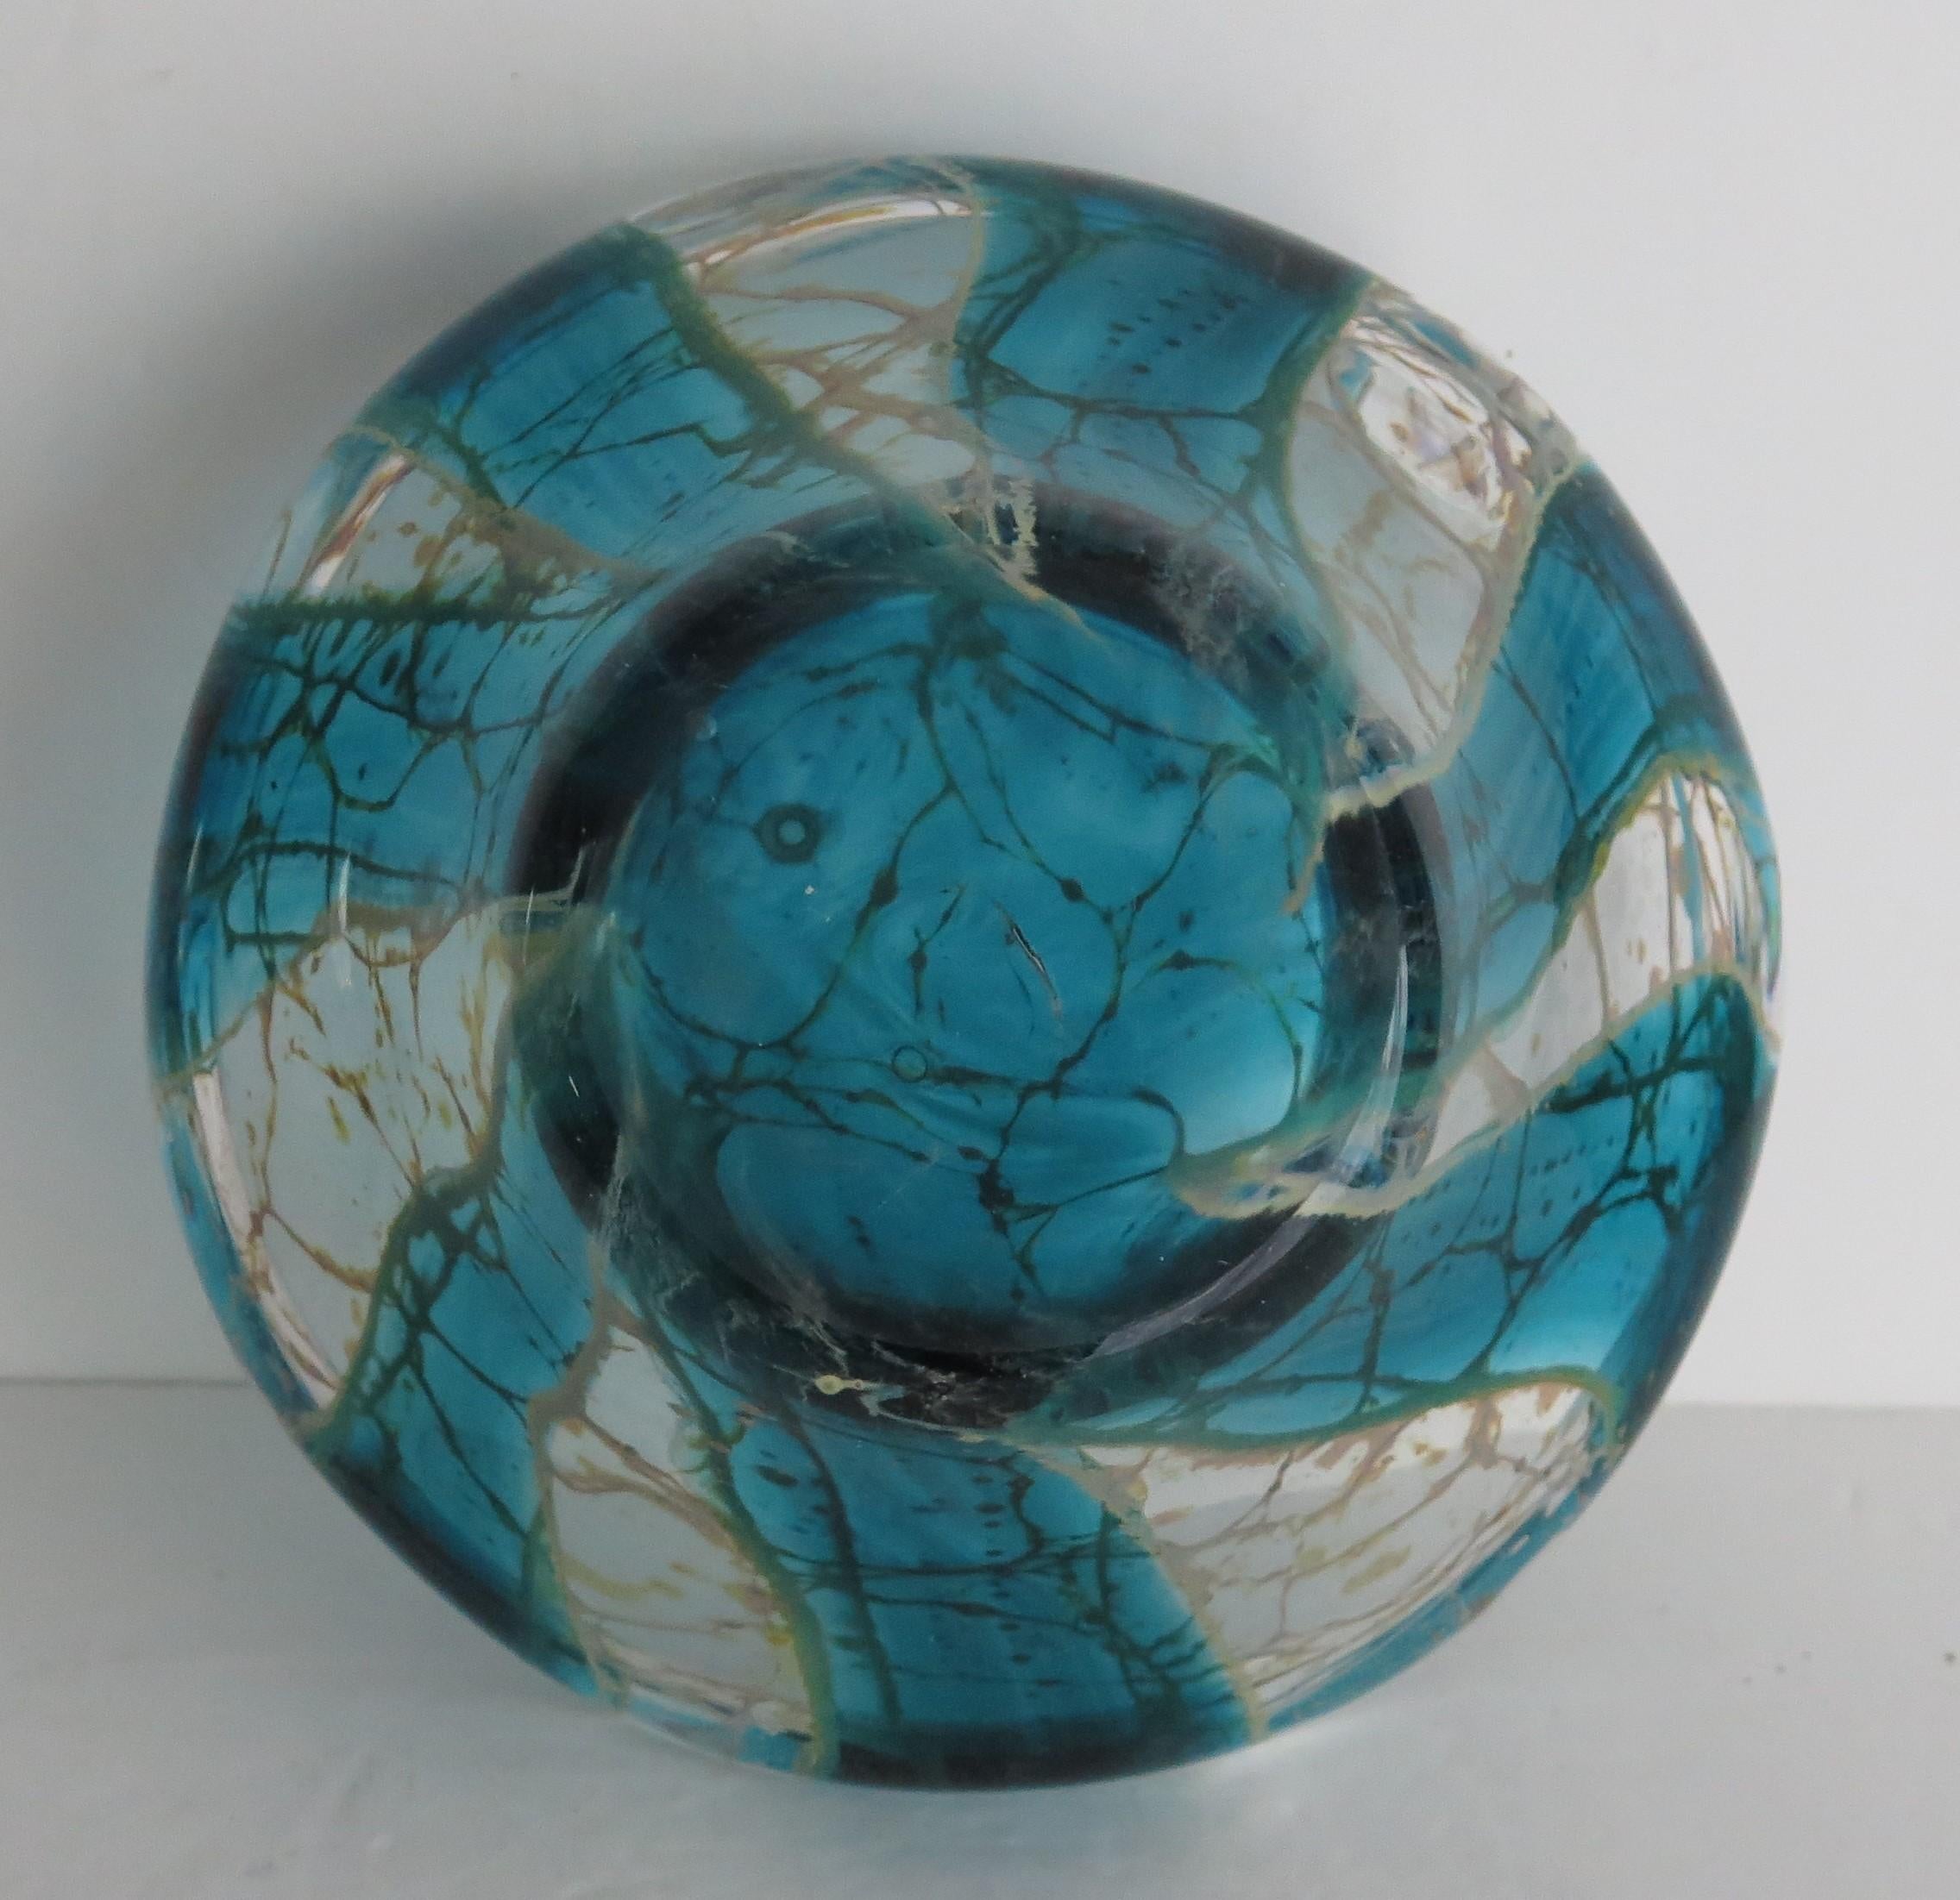 20th Century Mdina Maltese Glass Bowl in Crystal Blue Stripe Pattern, circa 1970s